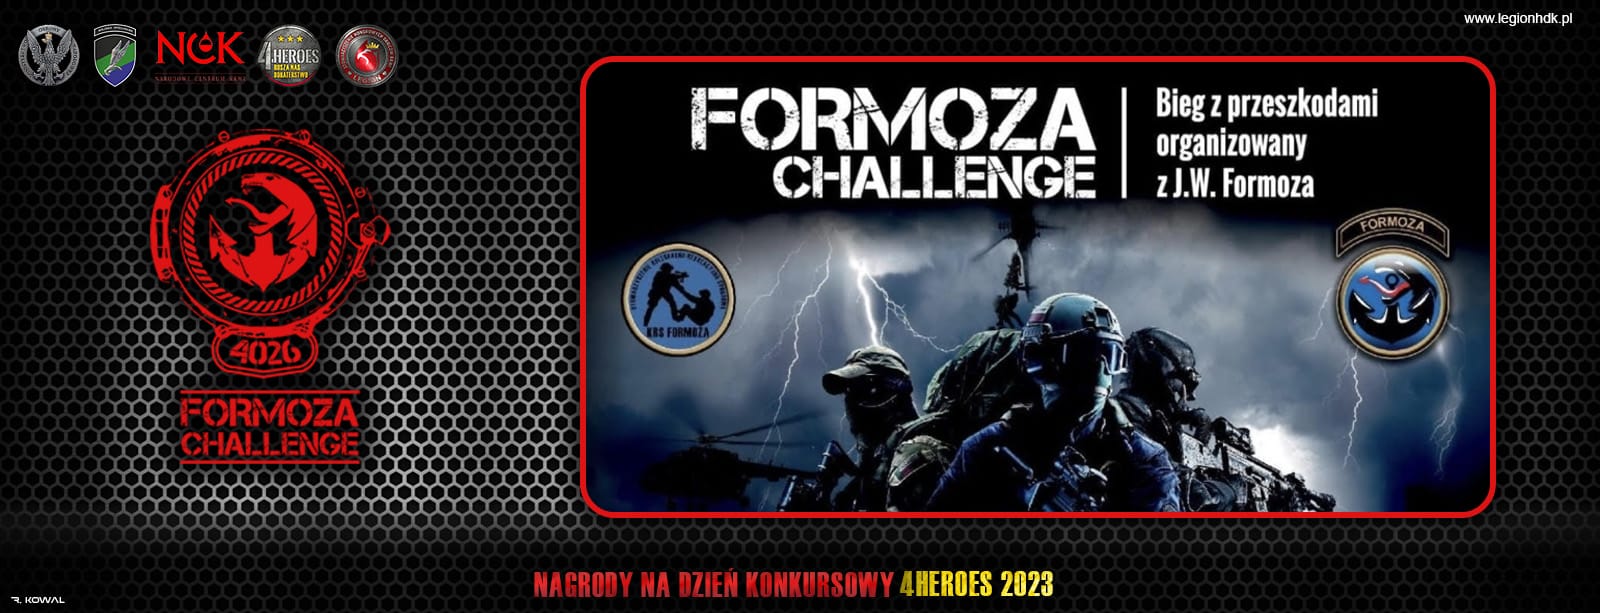 formoza challenge nagrody kampanii 4HEROES 2023 legionhdk